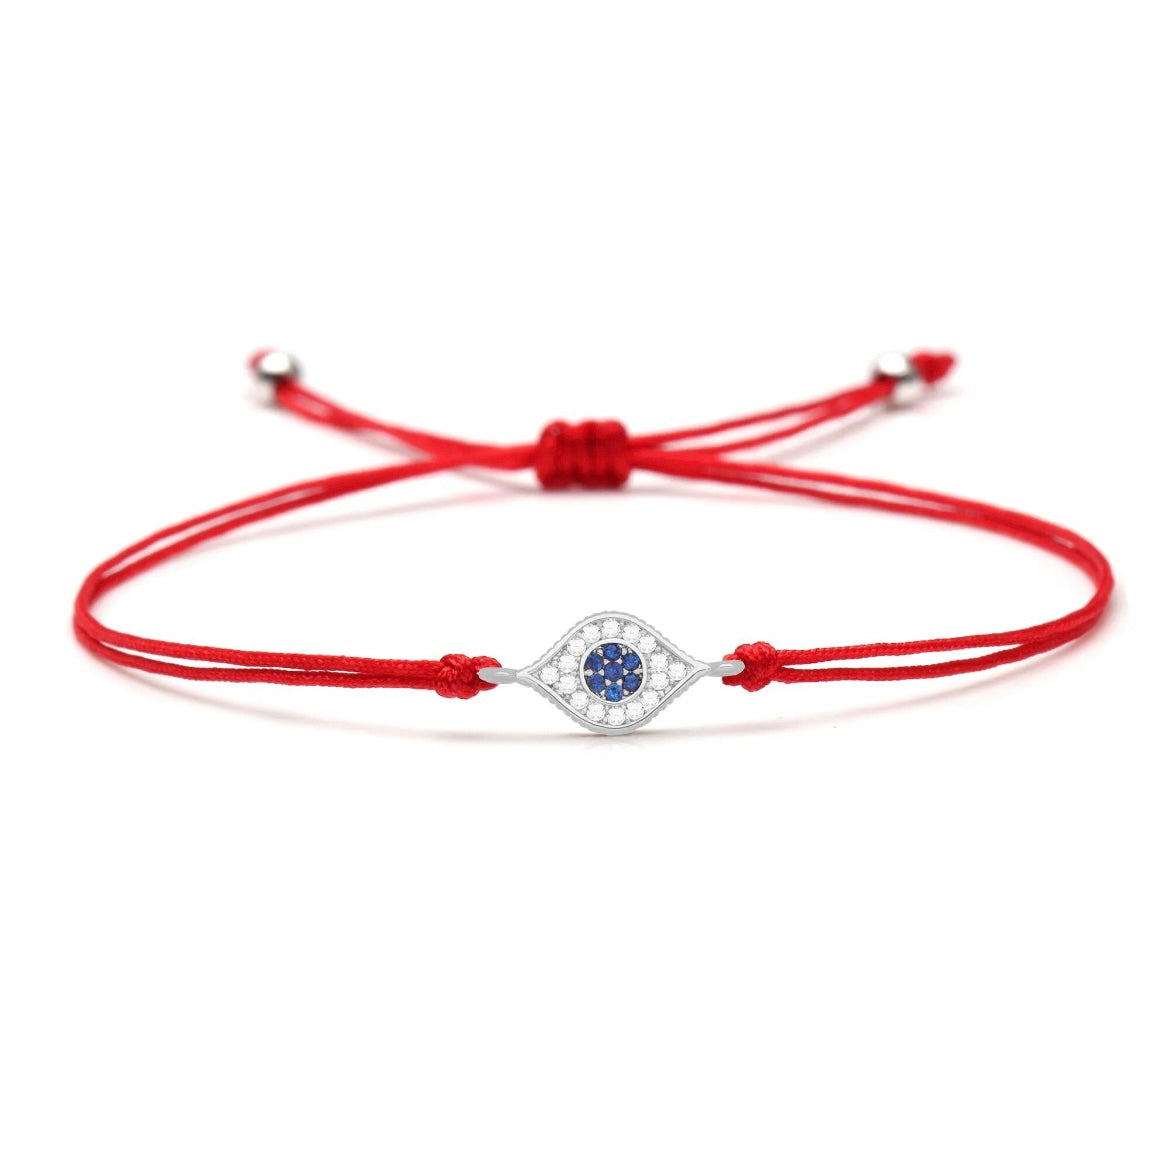 Blue CZ Stones Silver Evil Eye Charm Red String Protection Bracelet - My Harmony Tree